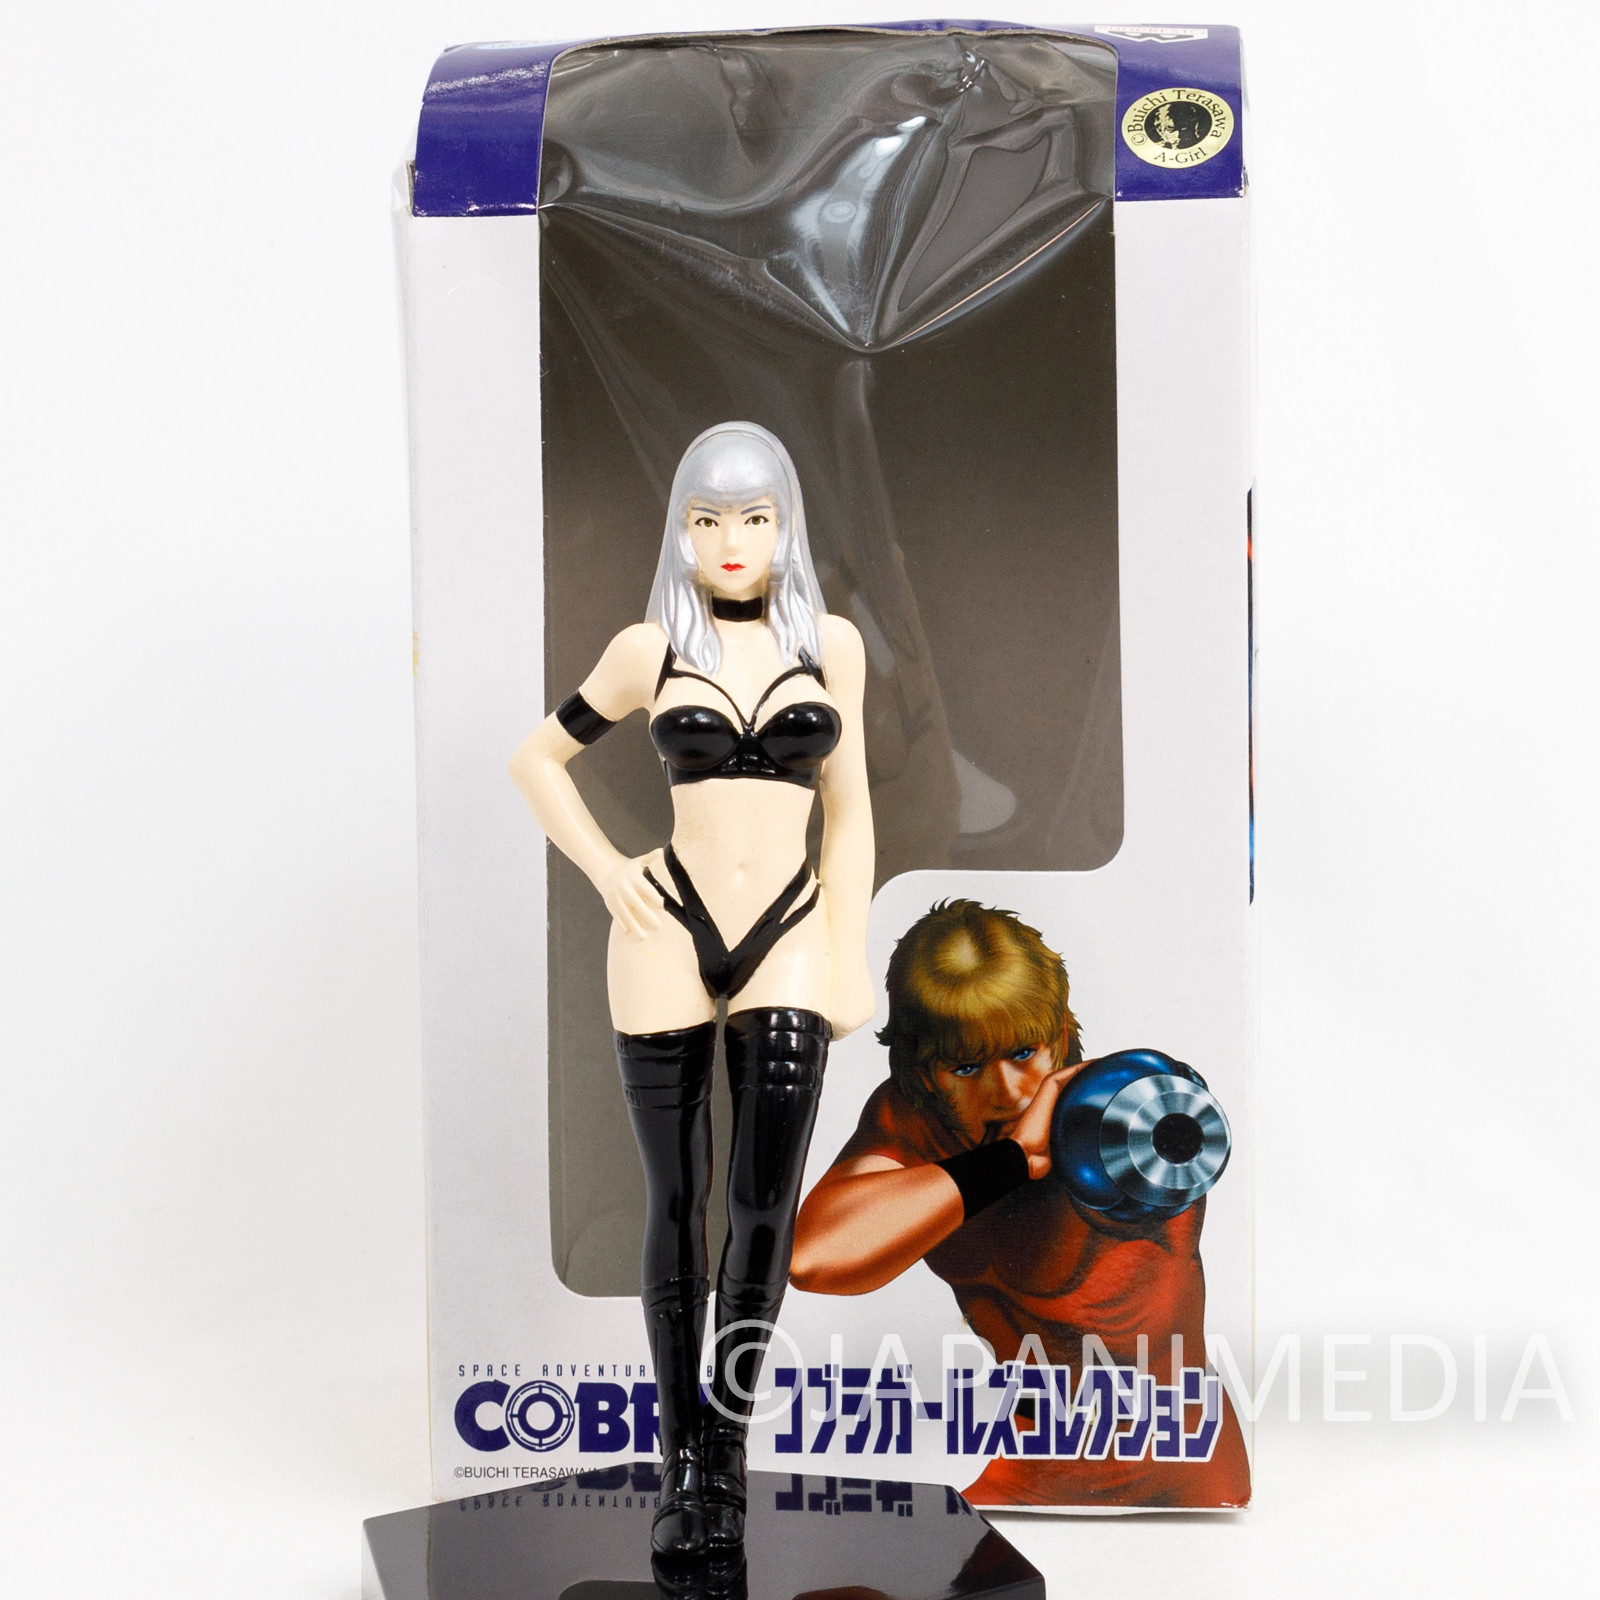 Space Adventure Cobra Utopia Girls Figure Collection JAPAN ANIME MANGA